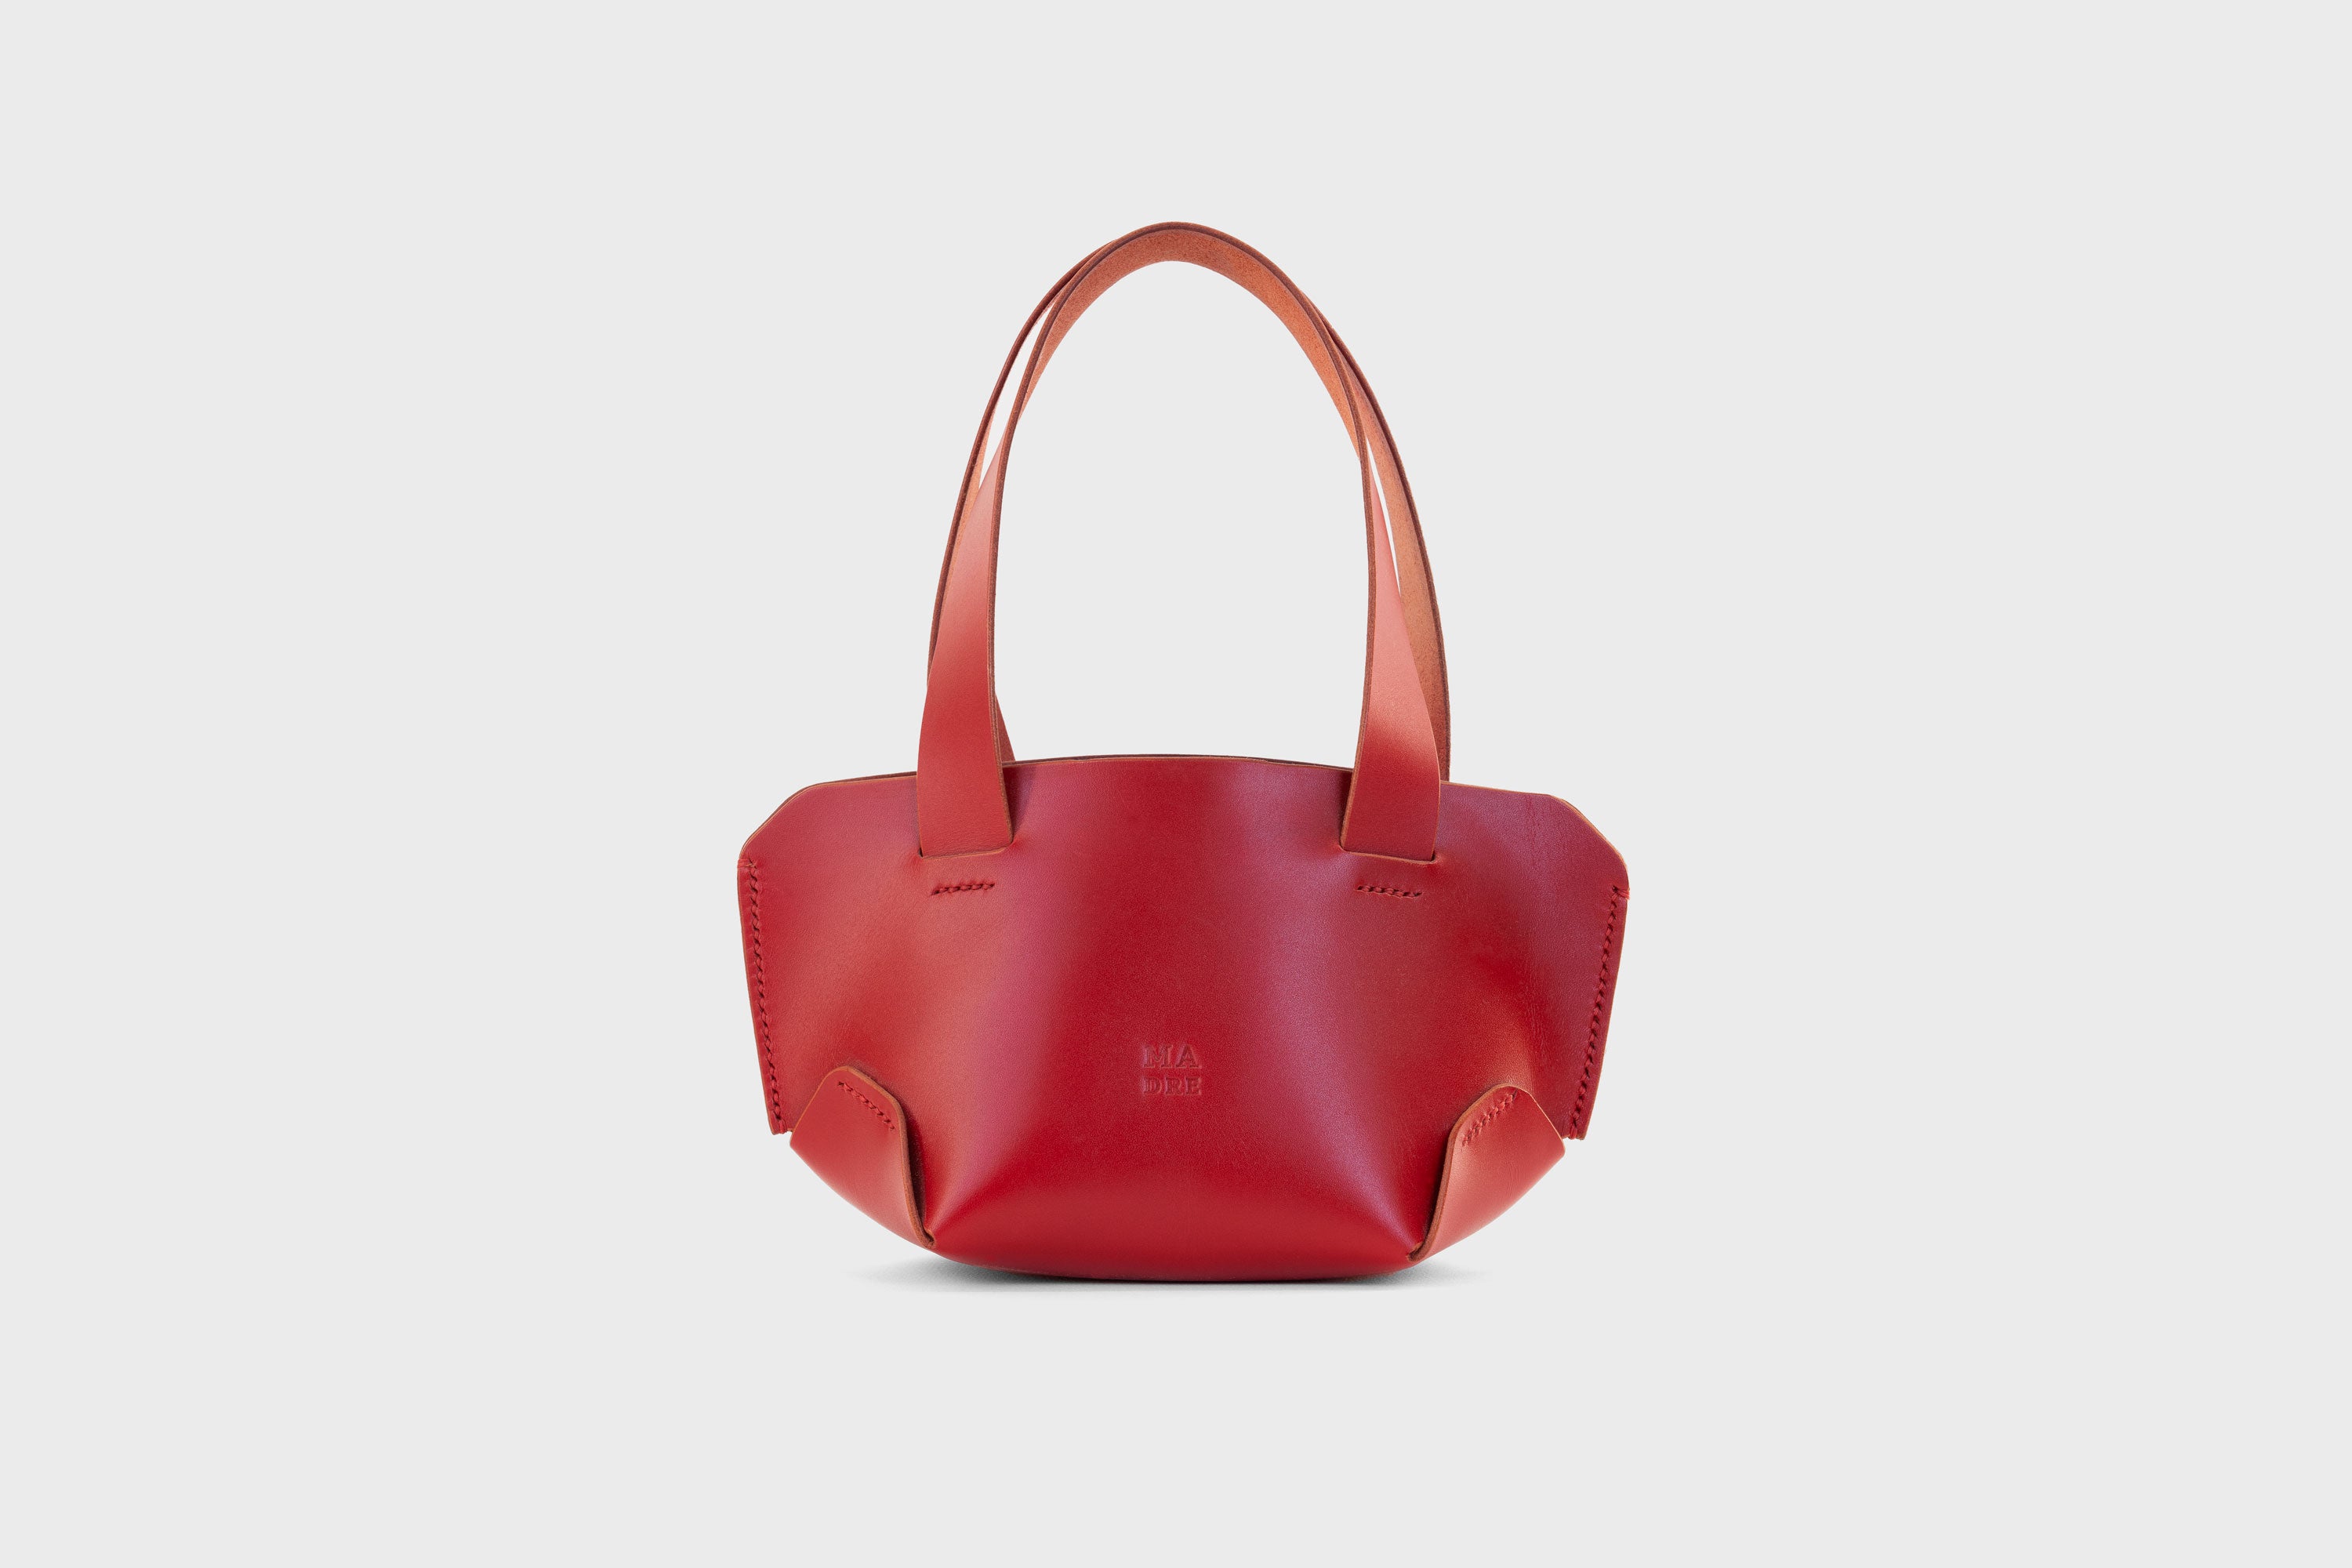 Mini Tote Bag Red Leather Handbag Small Modern Minimalist Design Premium Quality Atelier Madre Manuel Dreesmann Barcelona Spain